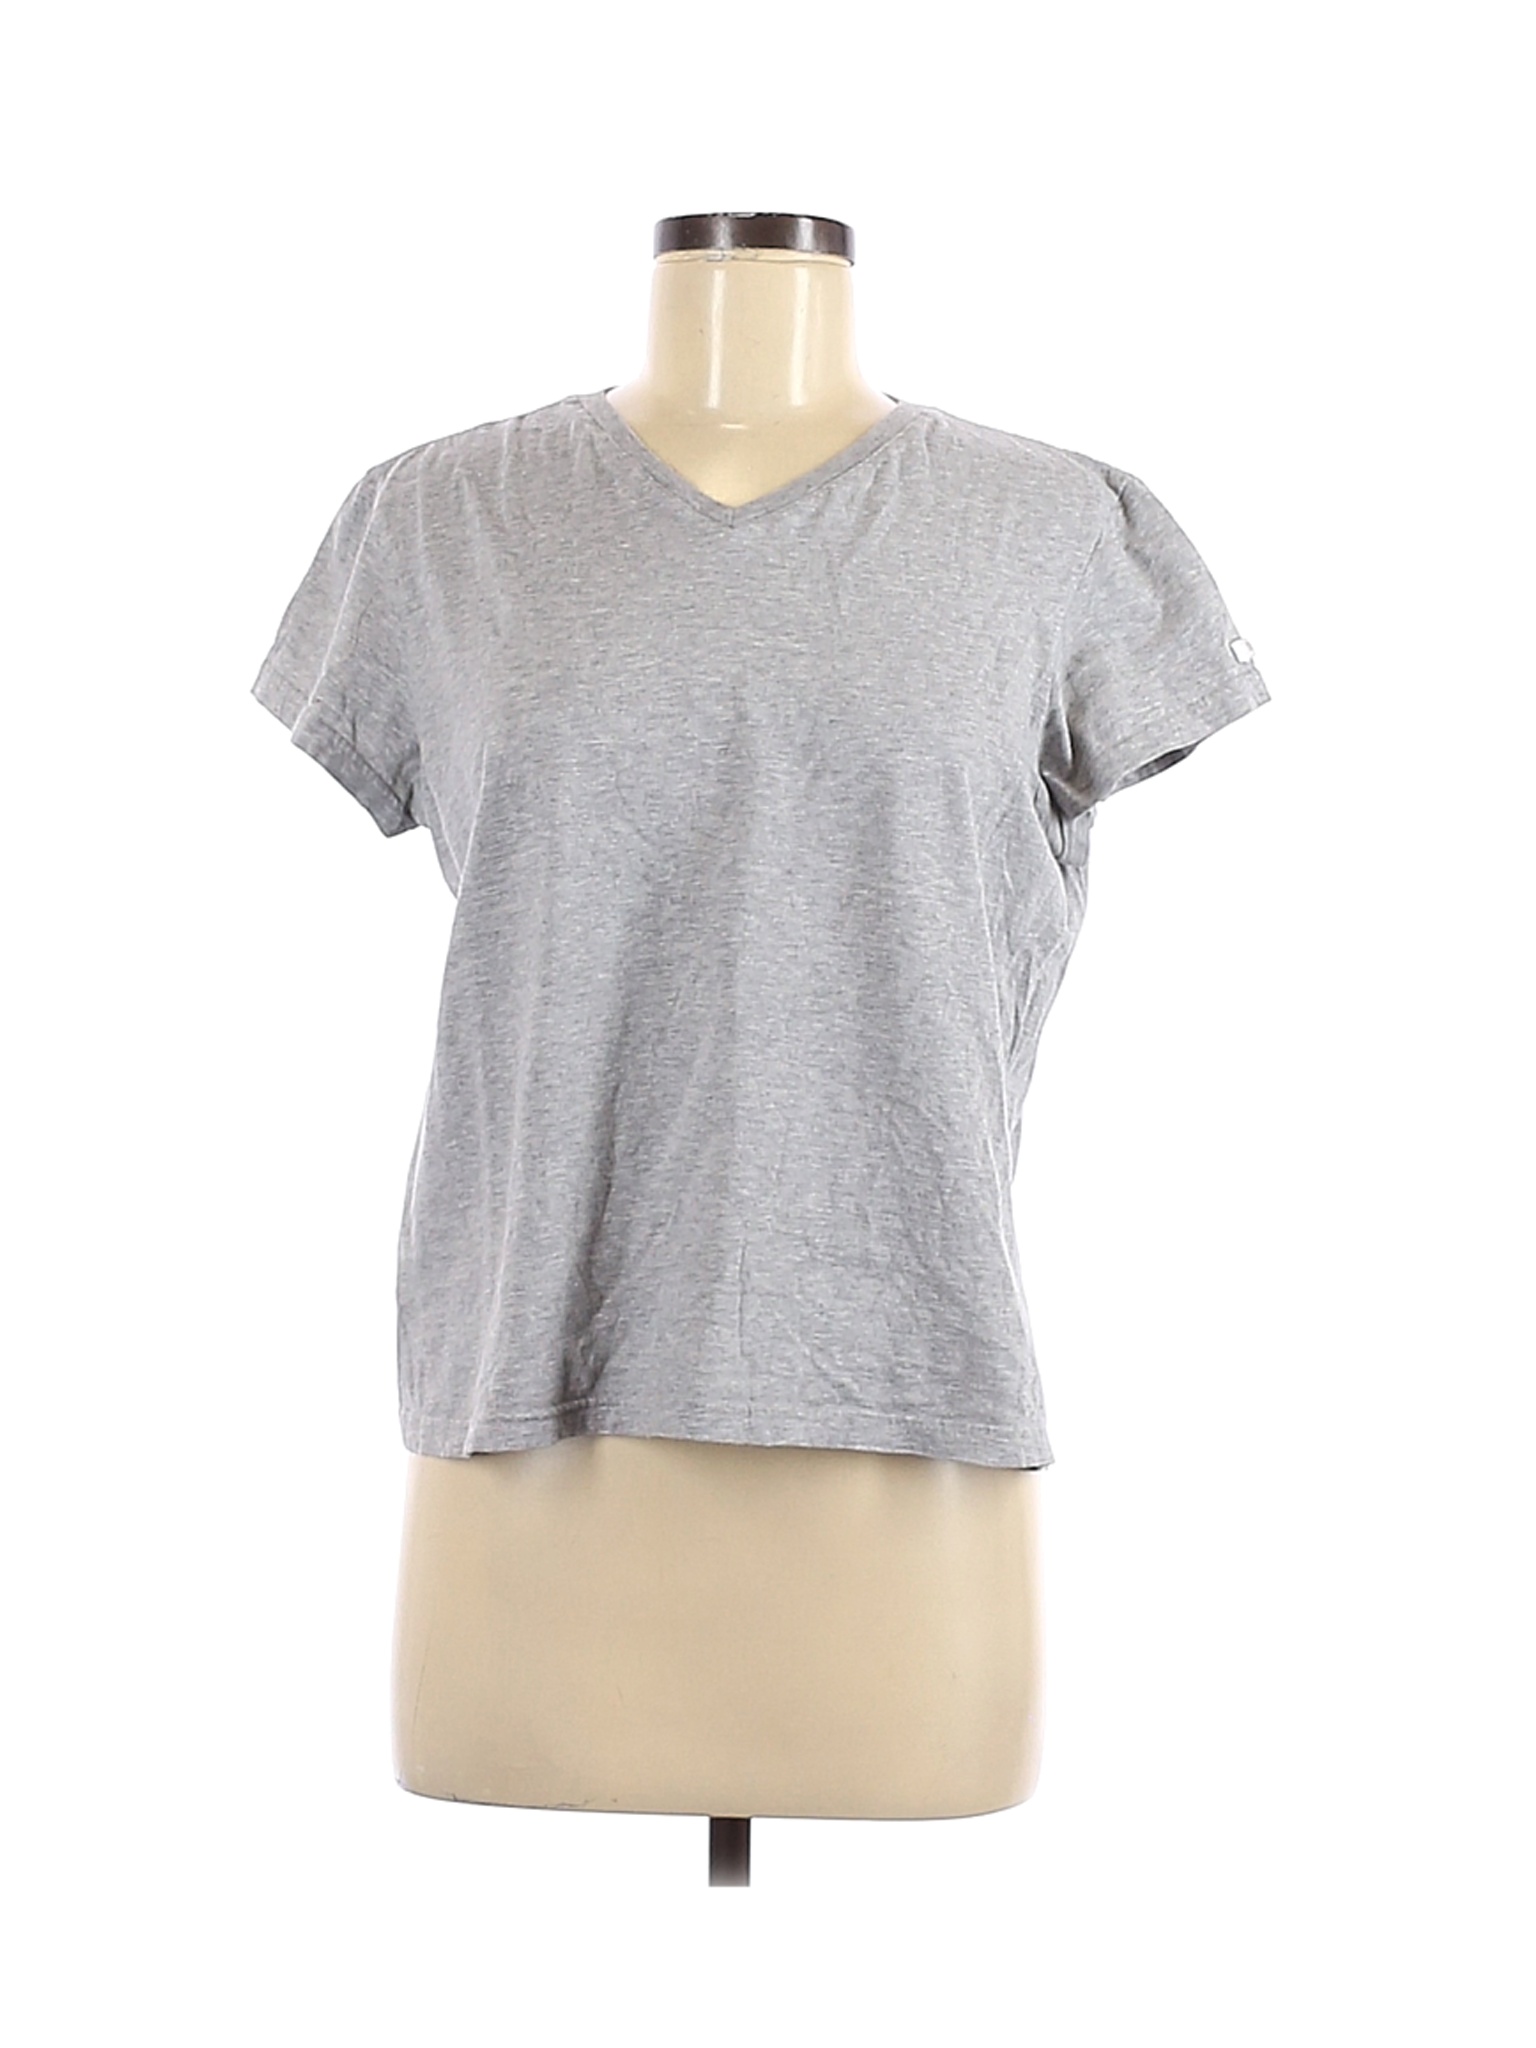 DKNY Women Gray Short Sleeve T-Shirt M | eBay